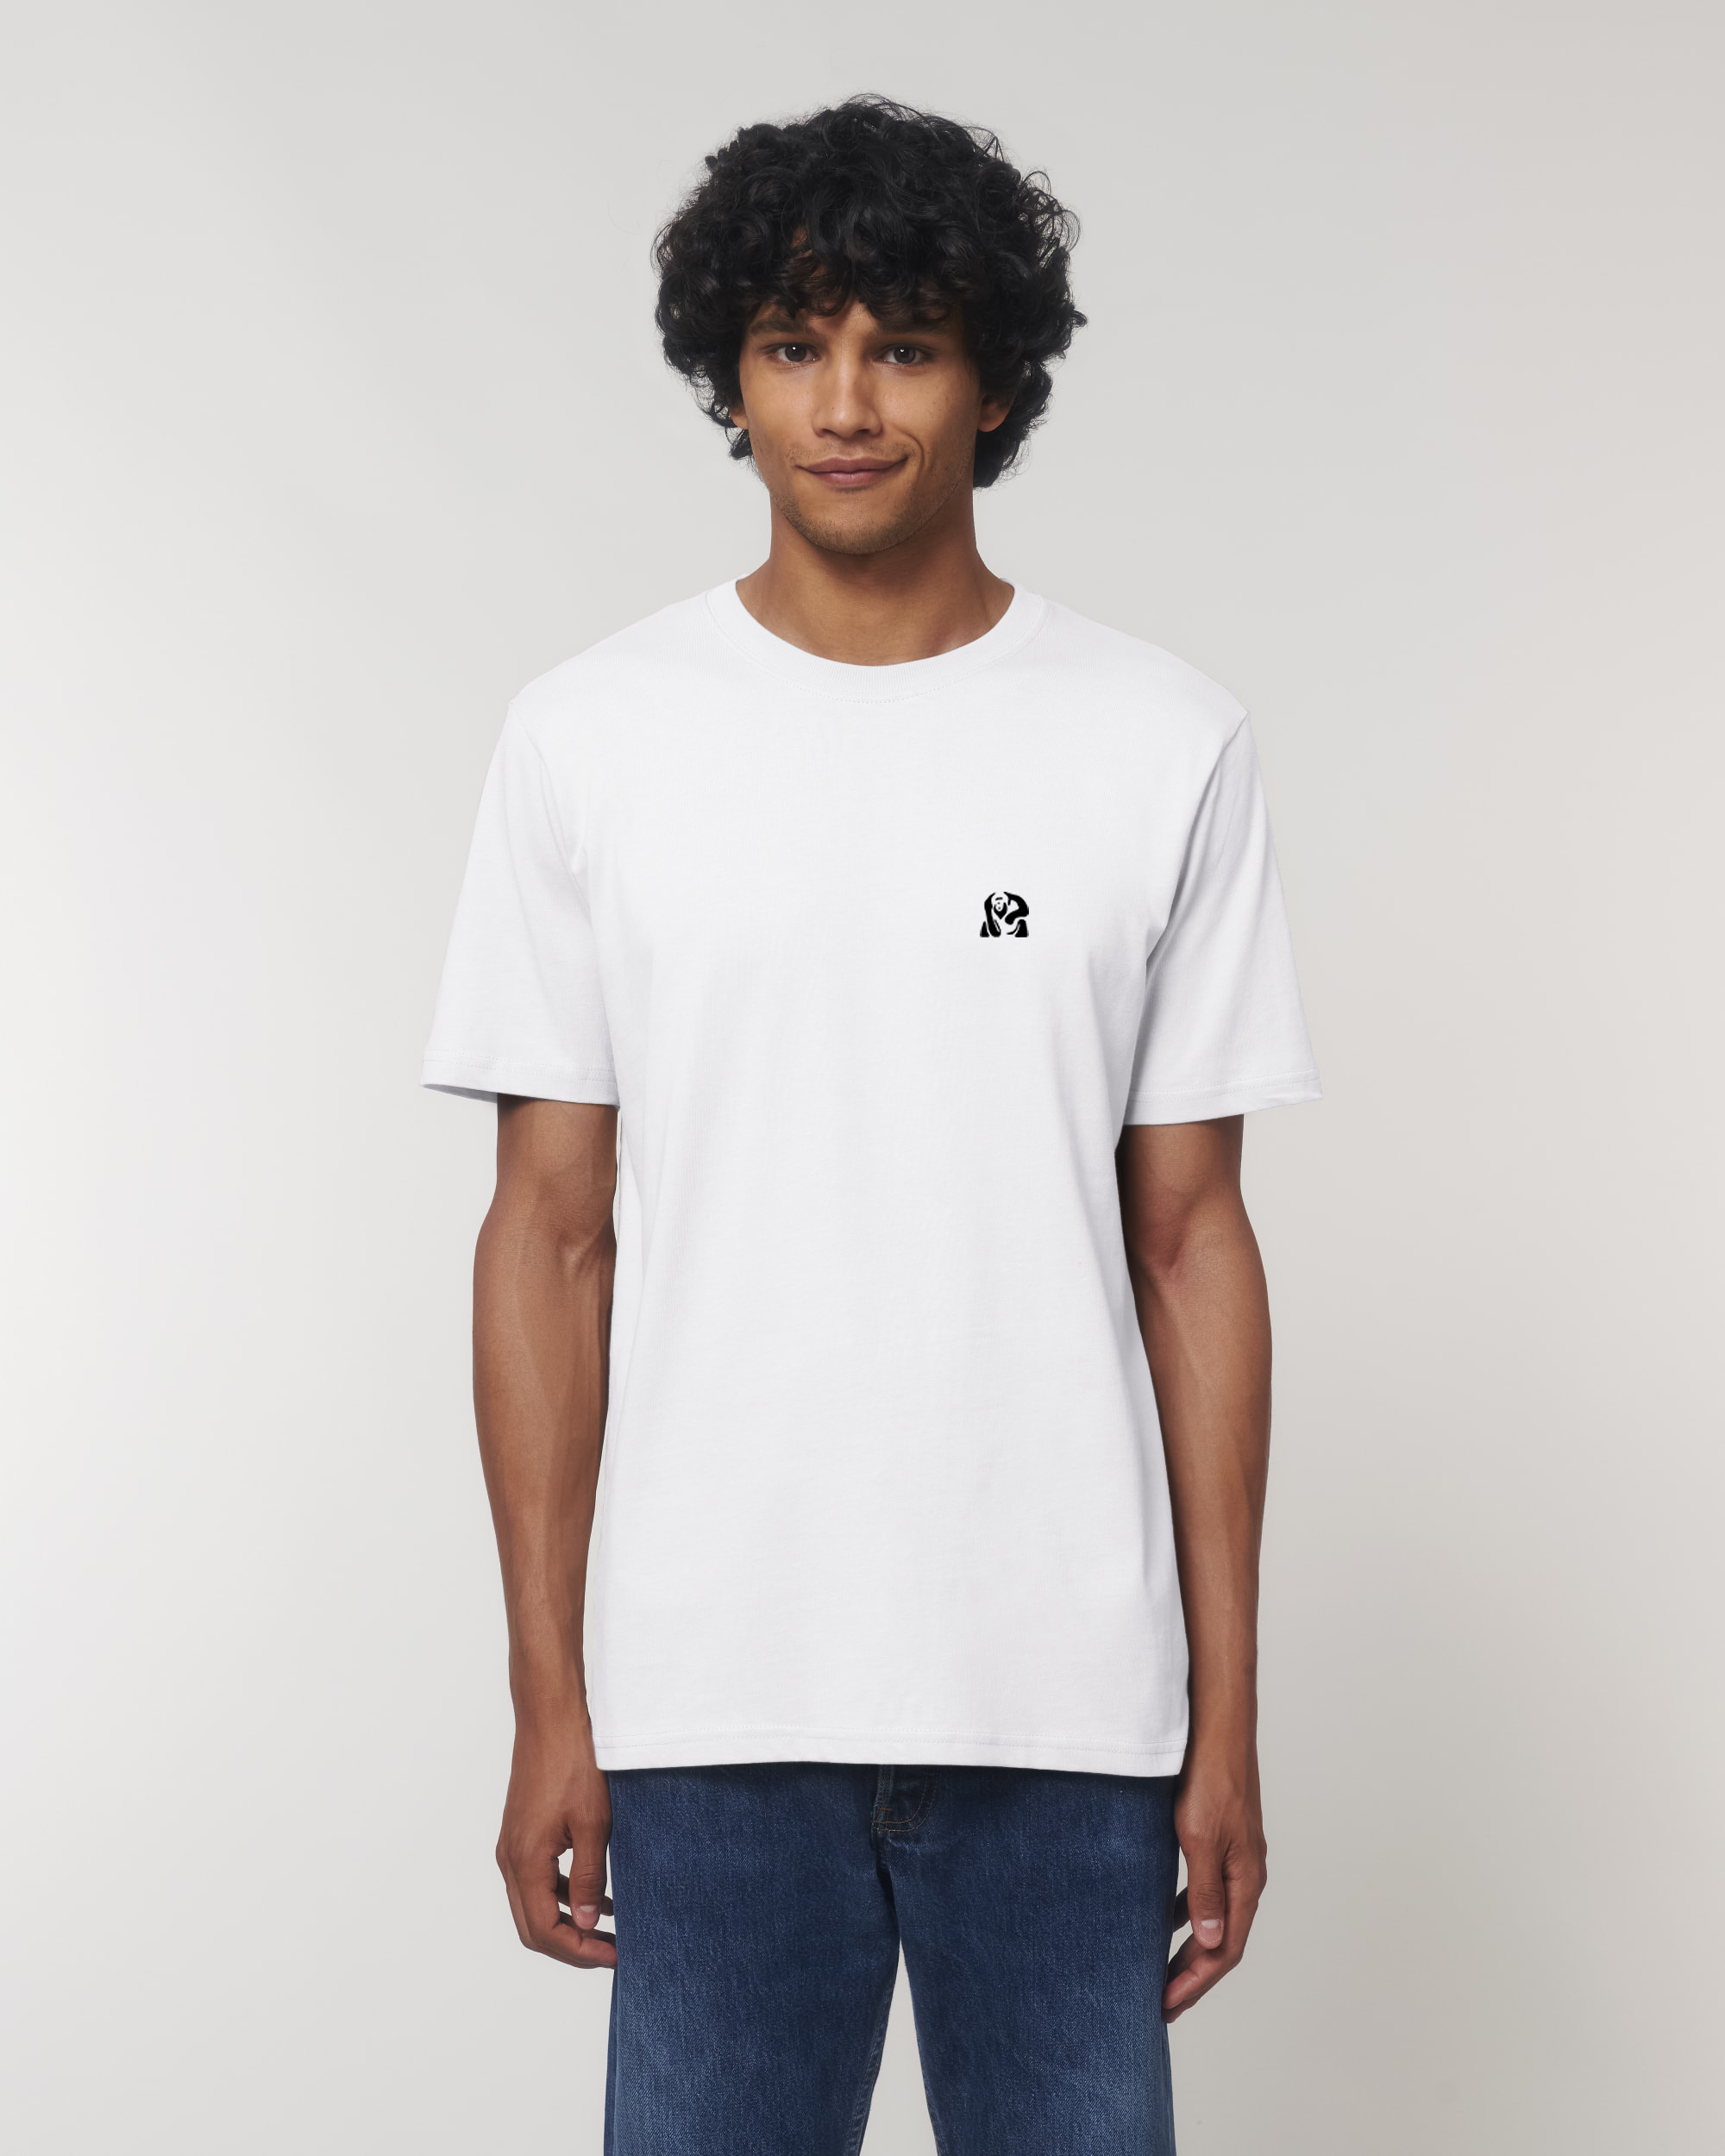 Thick unisex organic cotton t-shirt - Sumatra